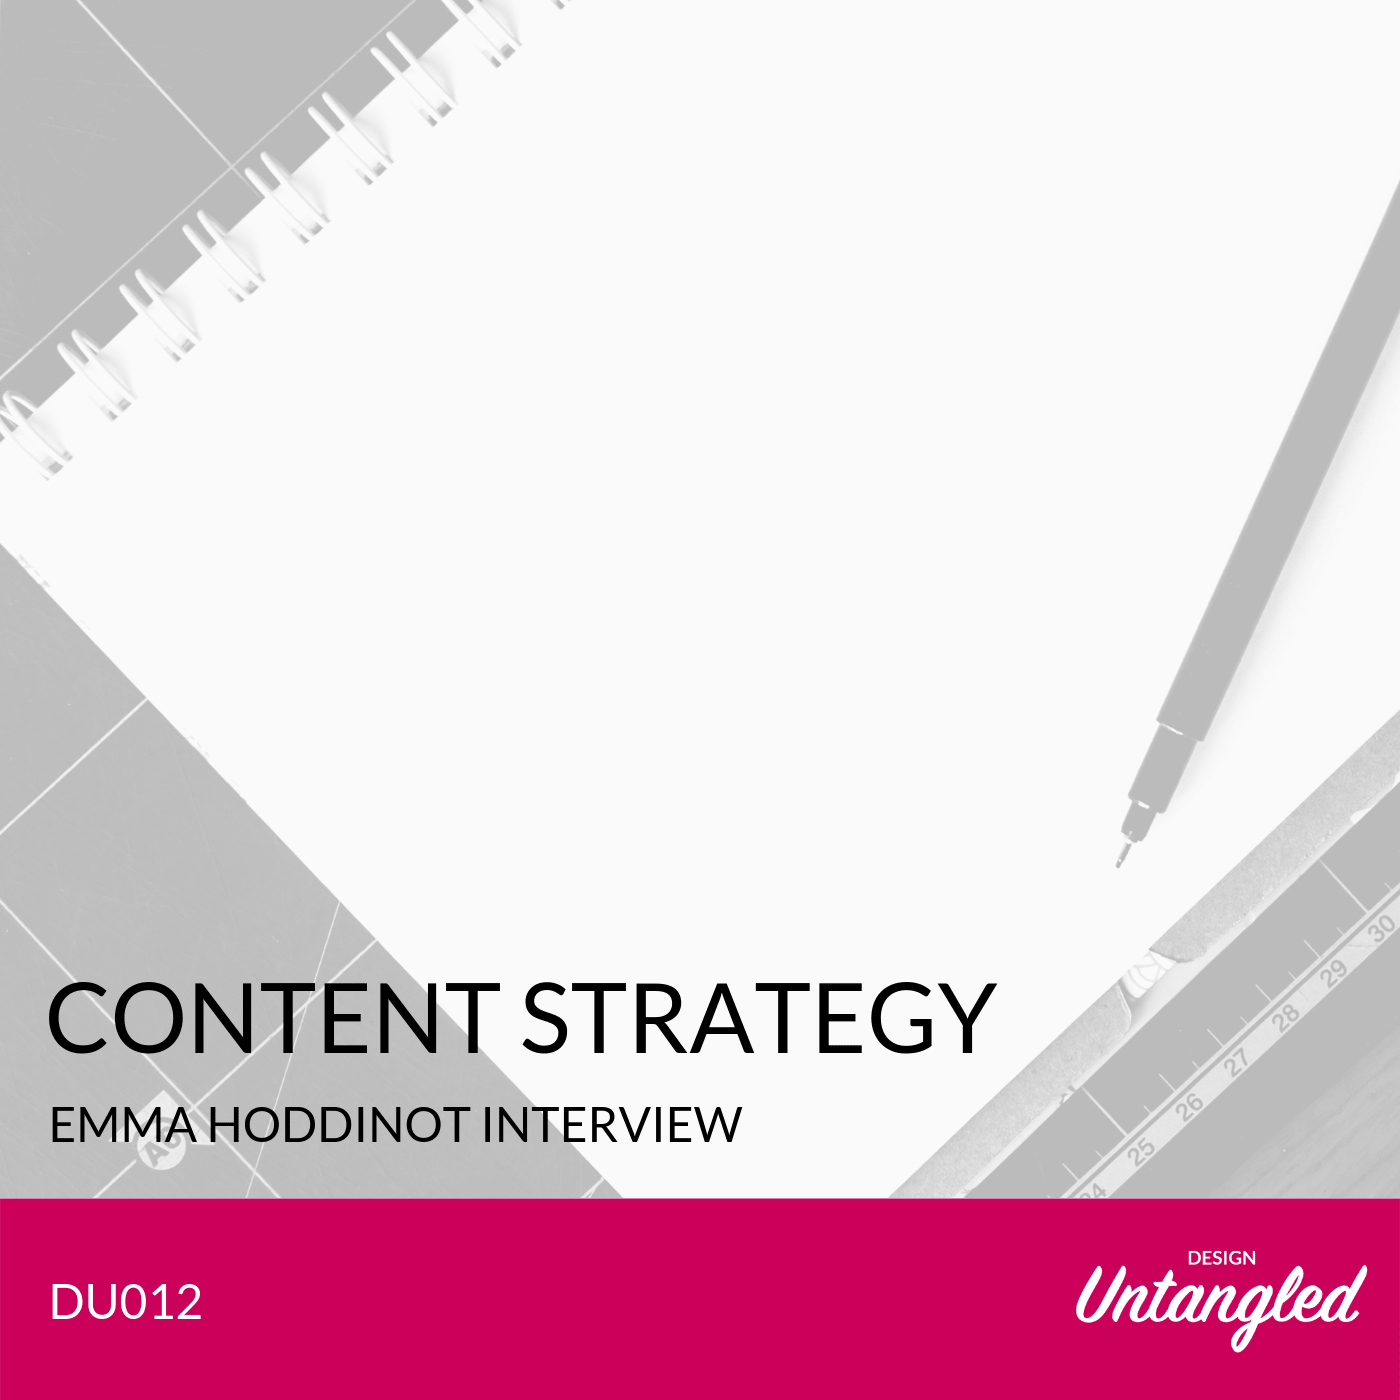 DU012 – Content Strategy – Emma Hoddinot Interview